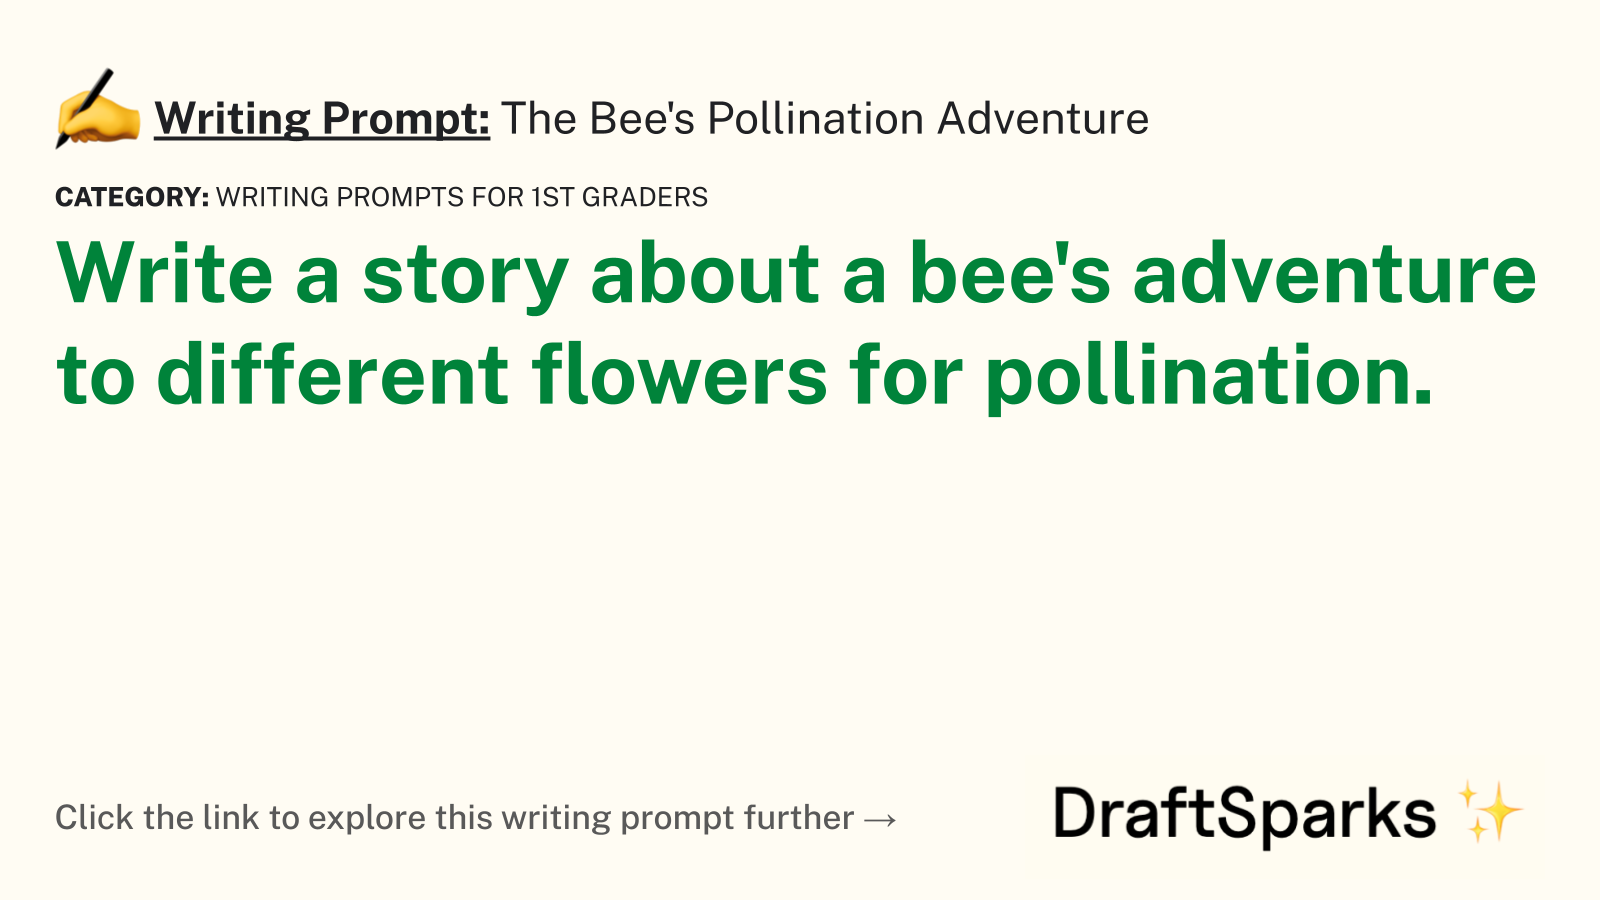 The Bee’s Pollination Adventure